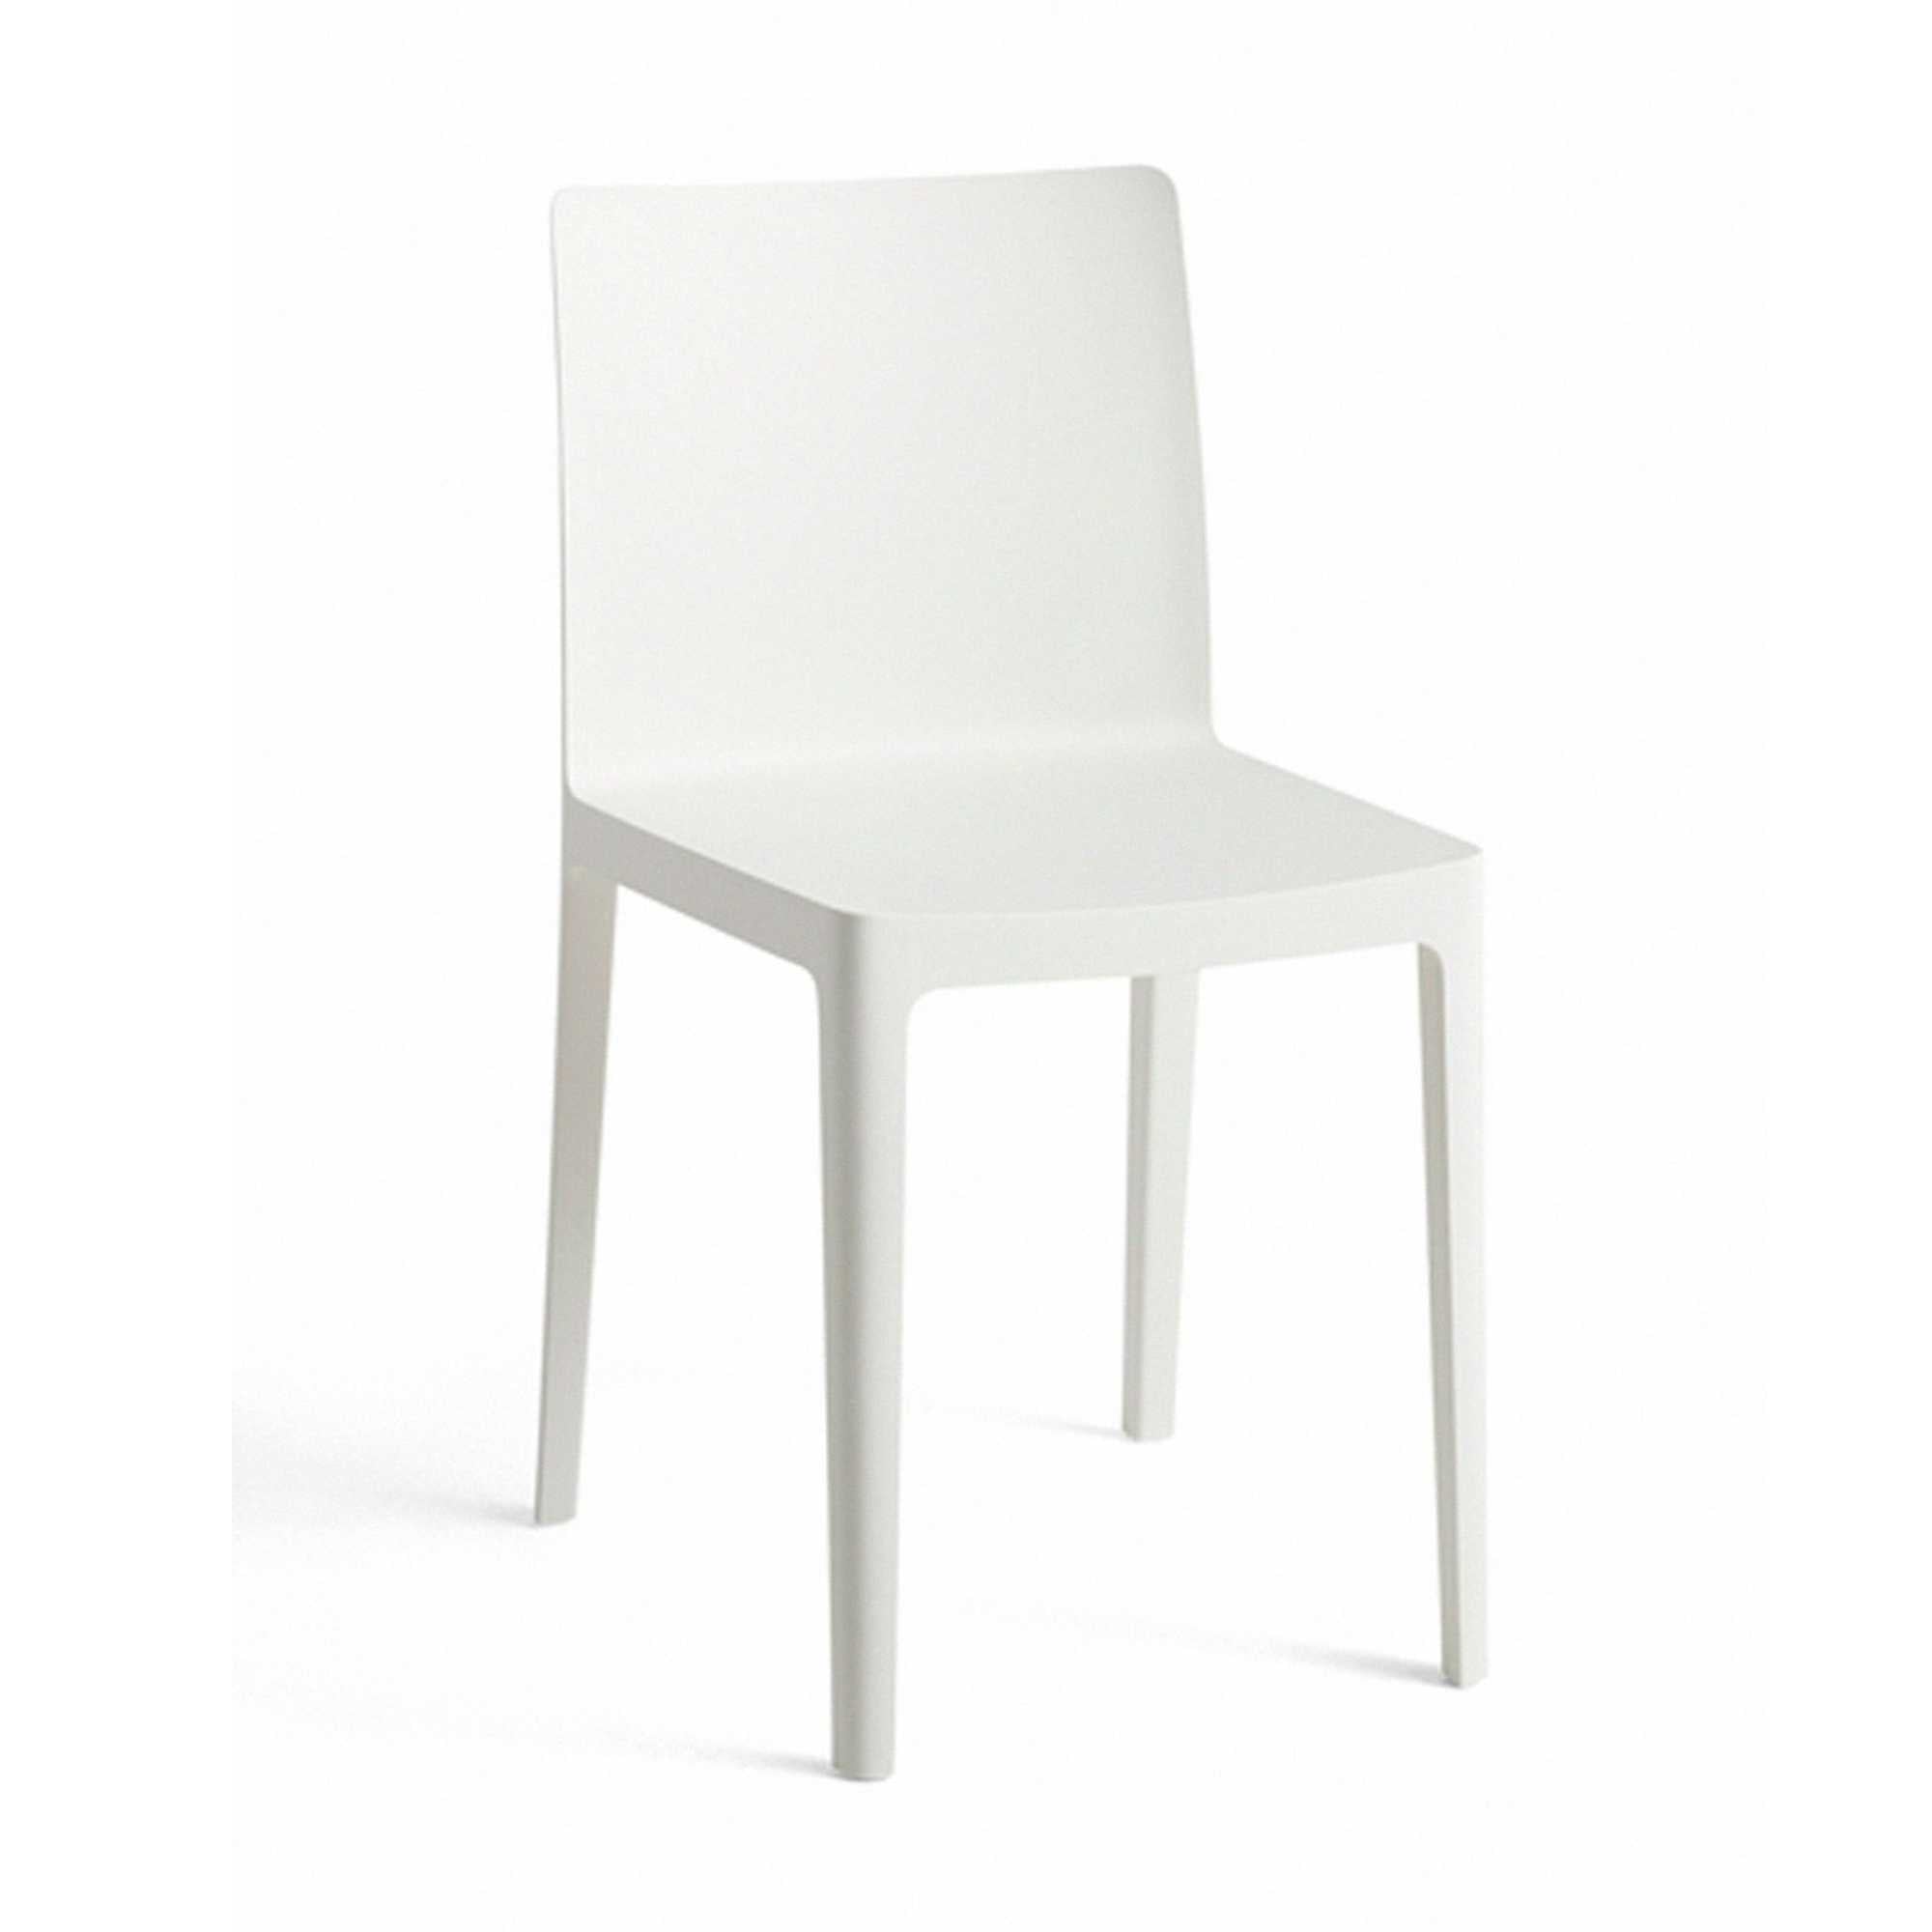 Hay Élémentaire chair, cream white (outdoor)